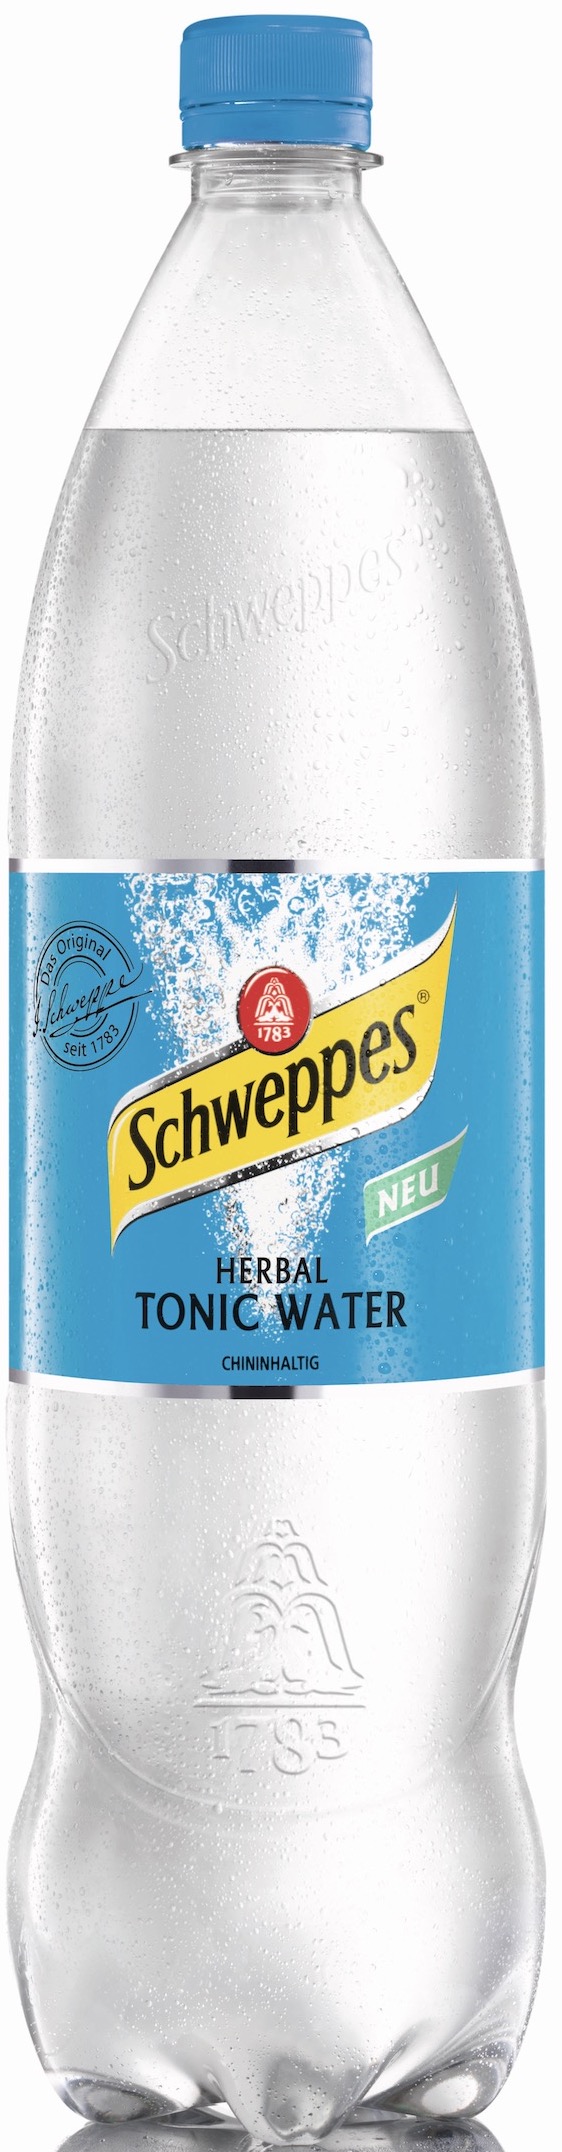 Schweppes Herbal Tonic Water 1,25L EINWEG 